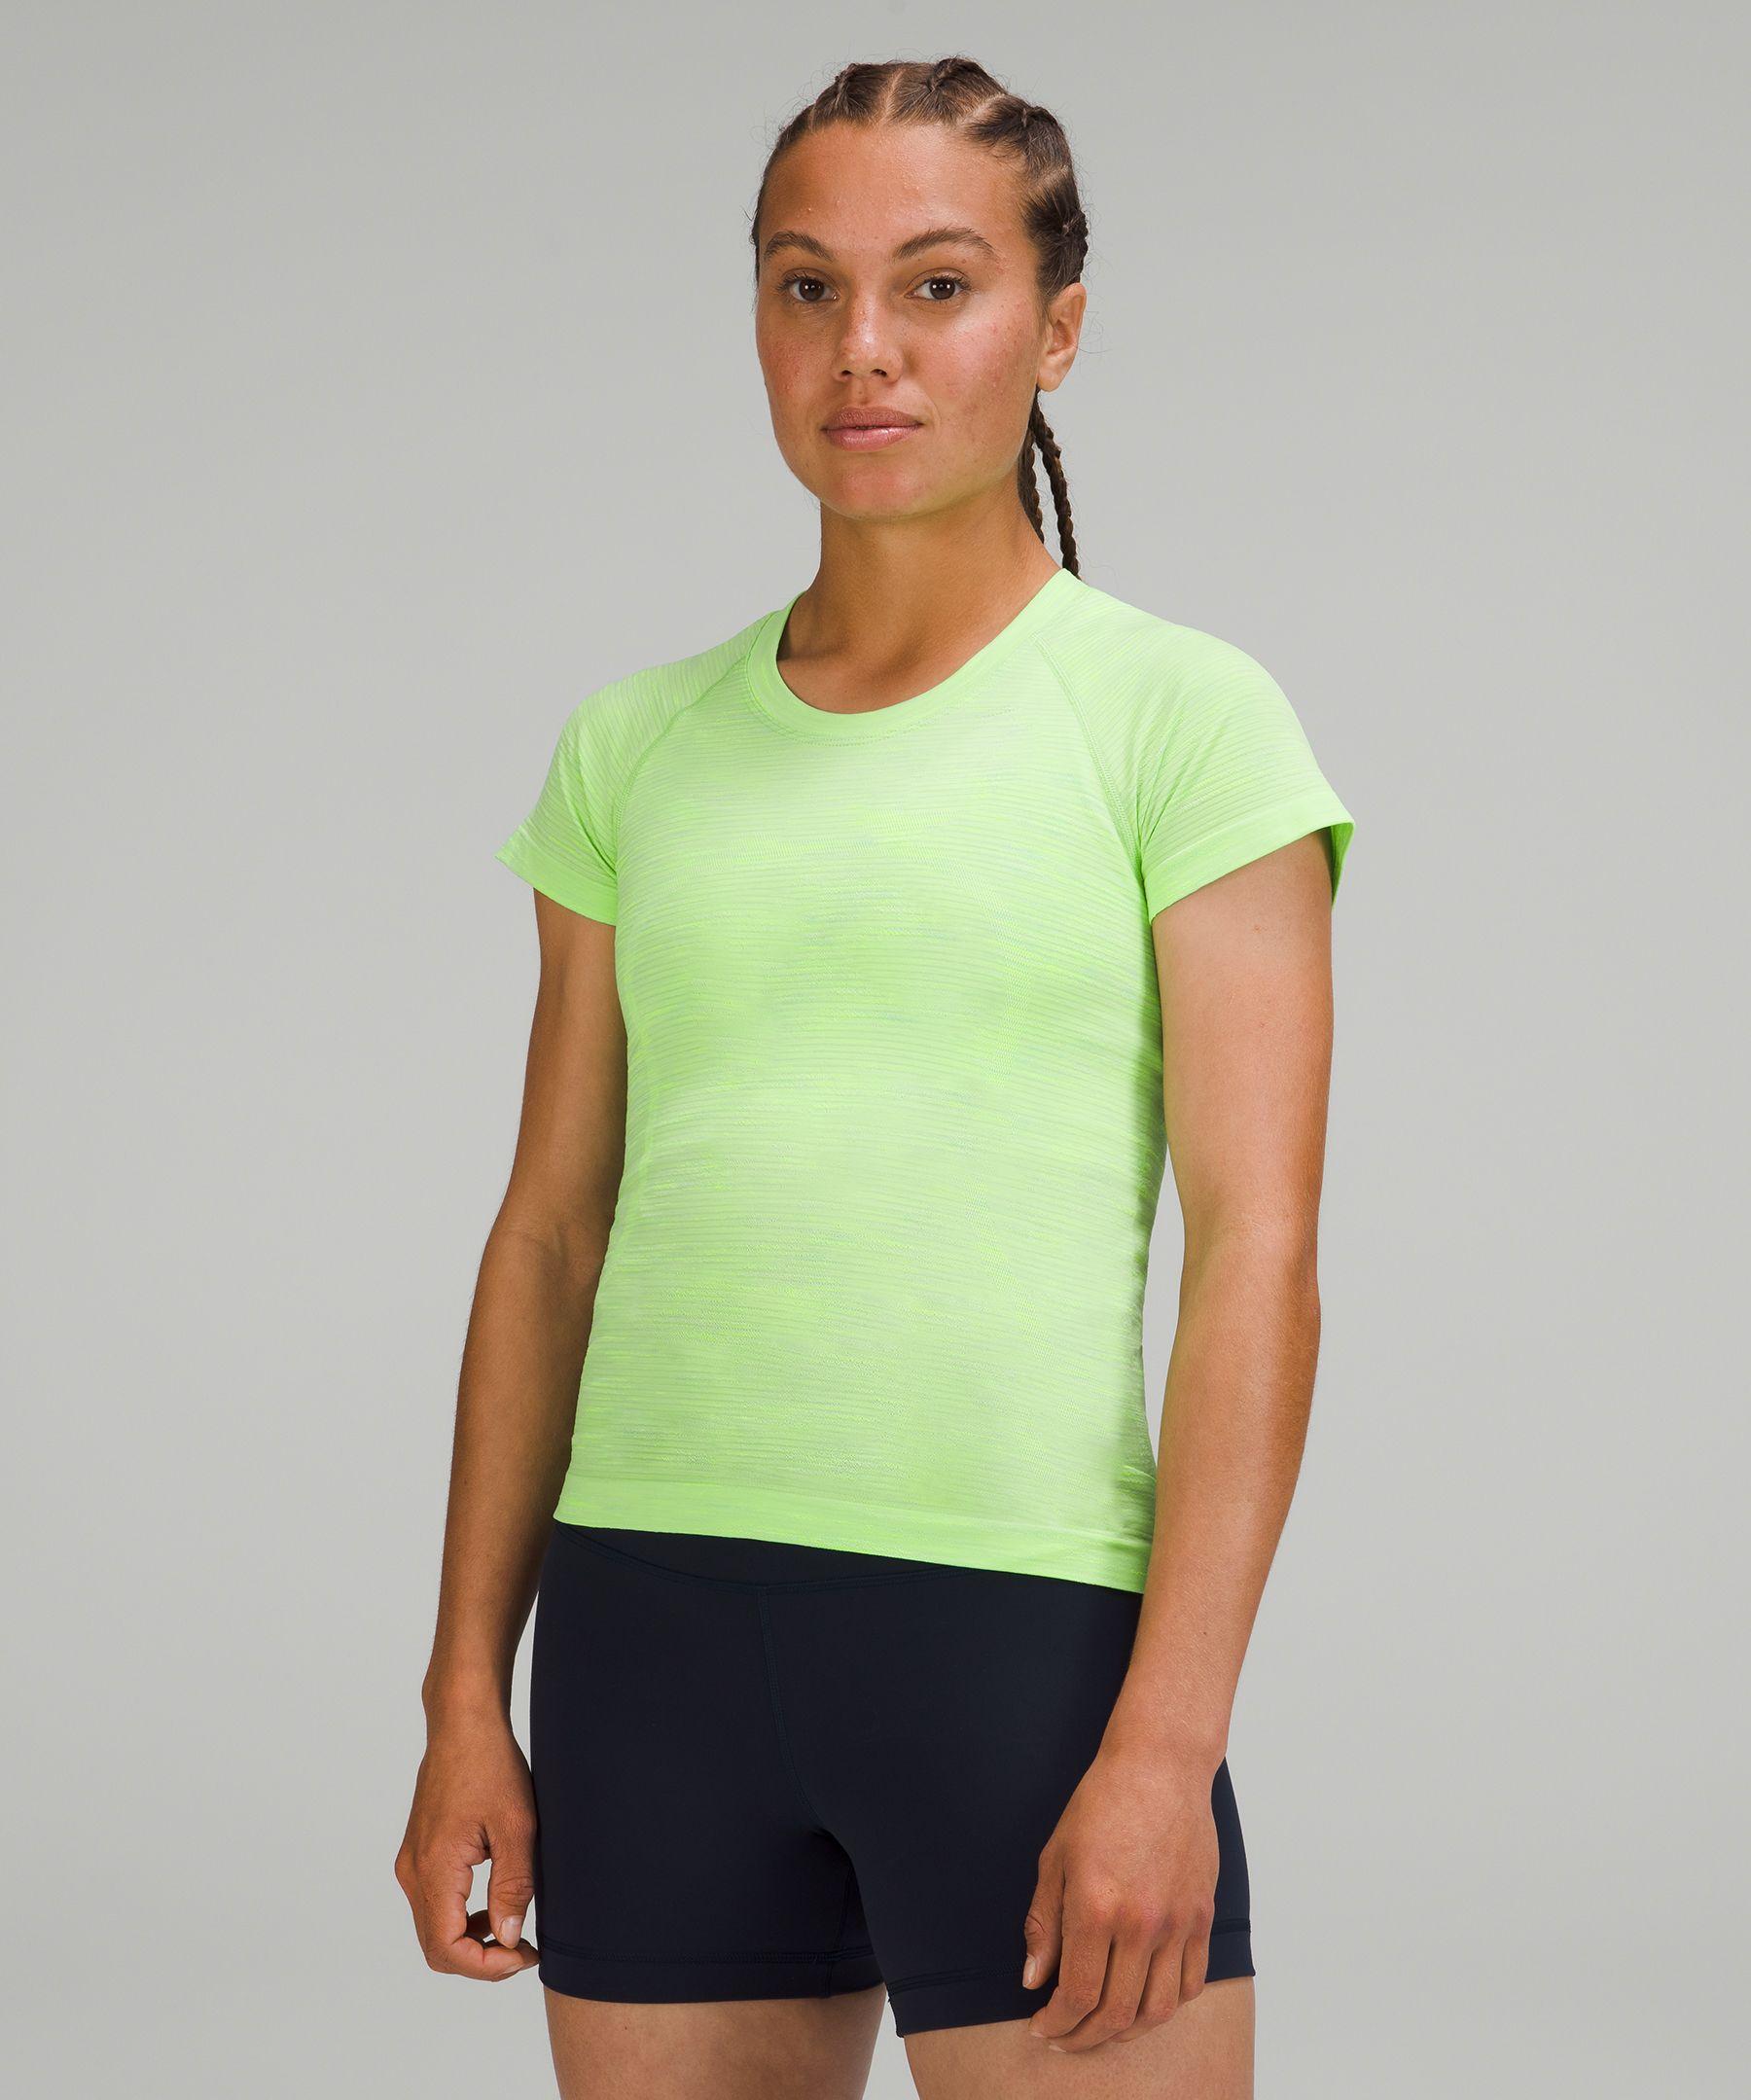 https://cdna.lystit.com/photos/lululemon/7de97c6d/lululemon-athletica-designer-Chroma-Check-Scream-Green-Light-Swiftly-Tech-Short-Sleeve-Shirt-20-Race-Length.jpeg